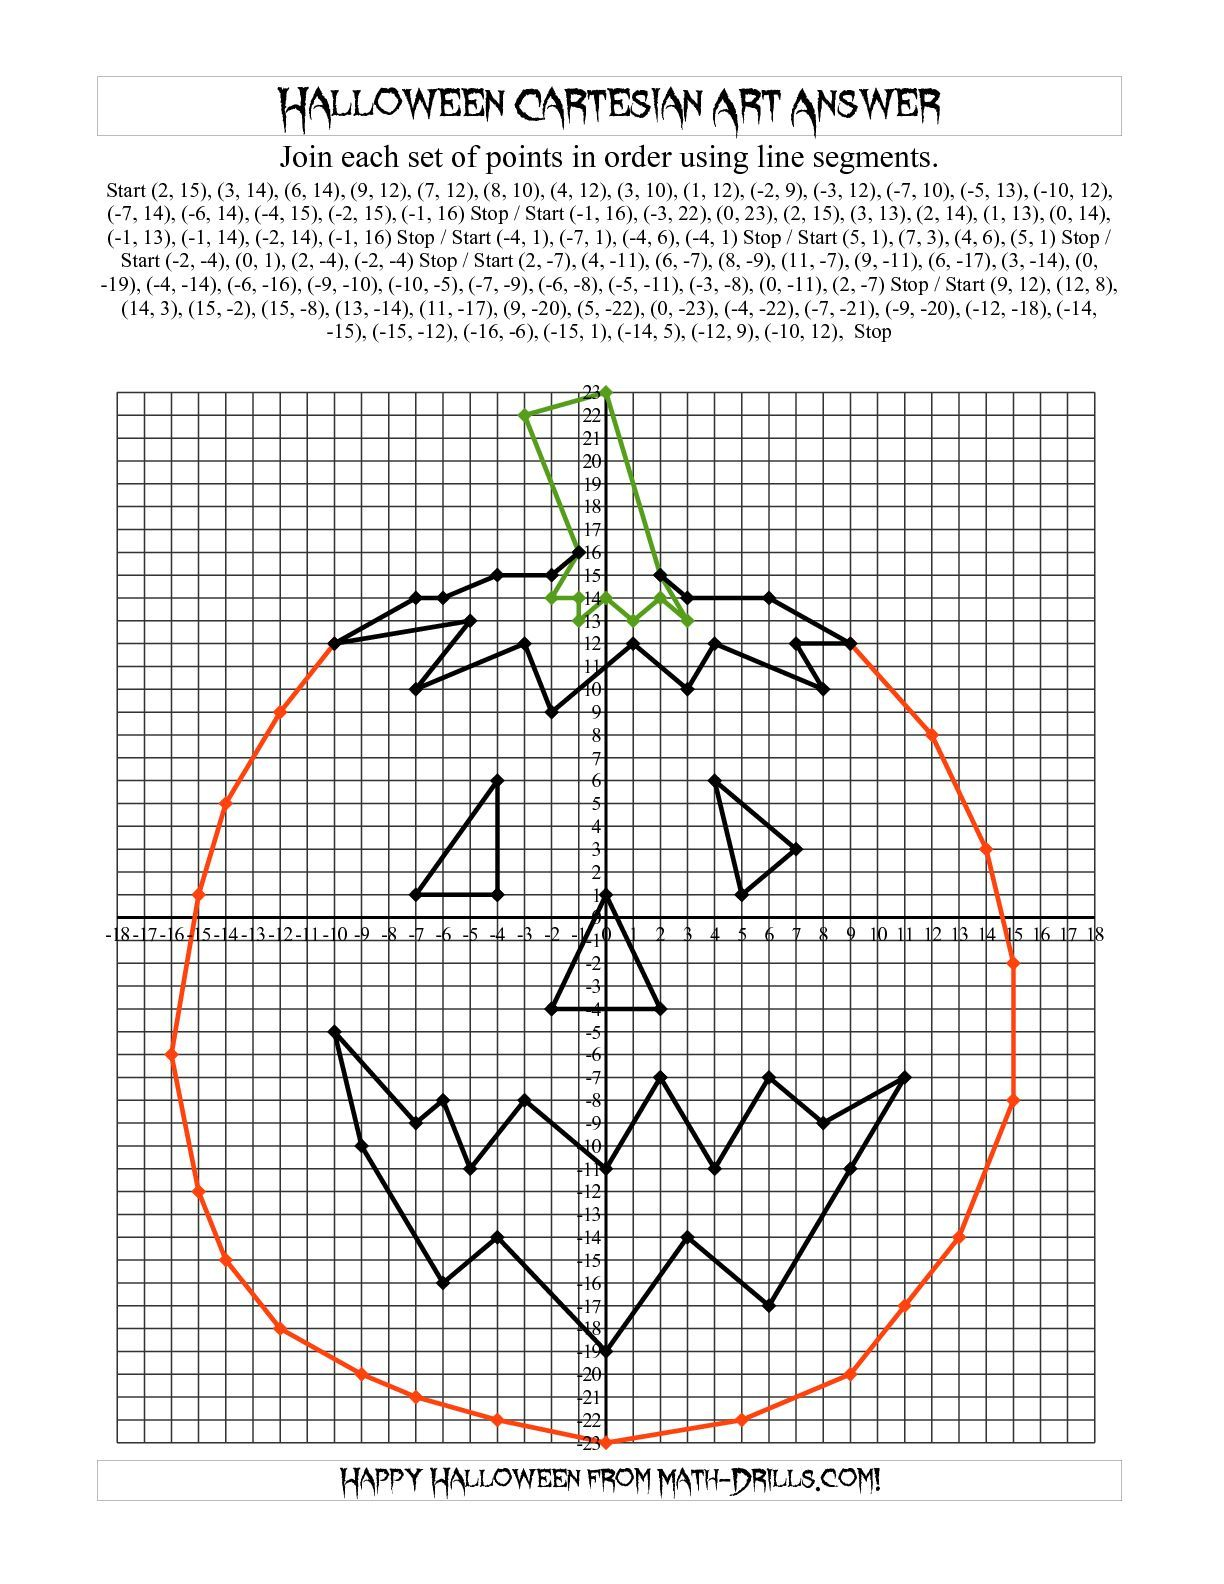 The Cartesian Art Halloween Jack-O-Lantern Math Worksheet